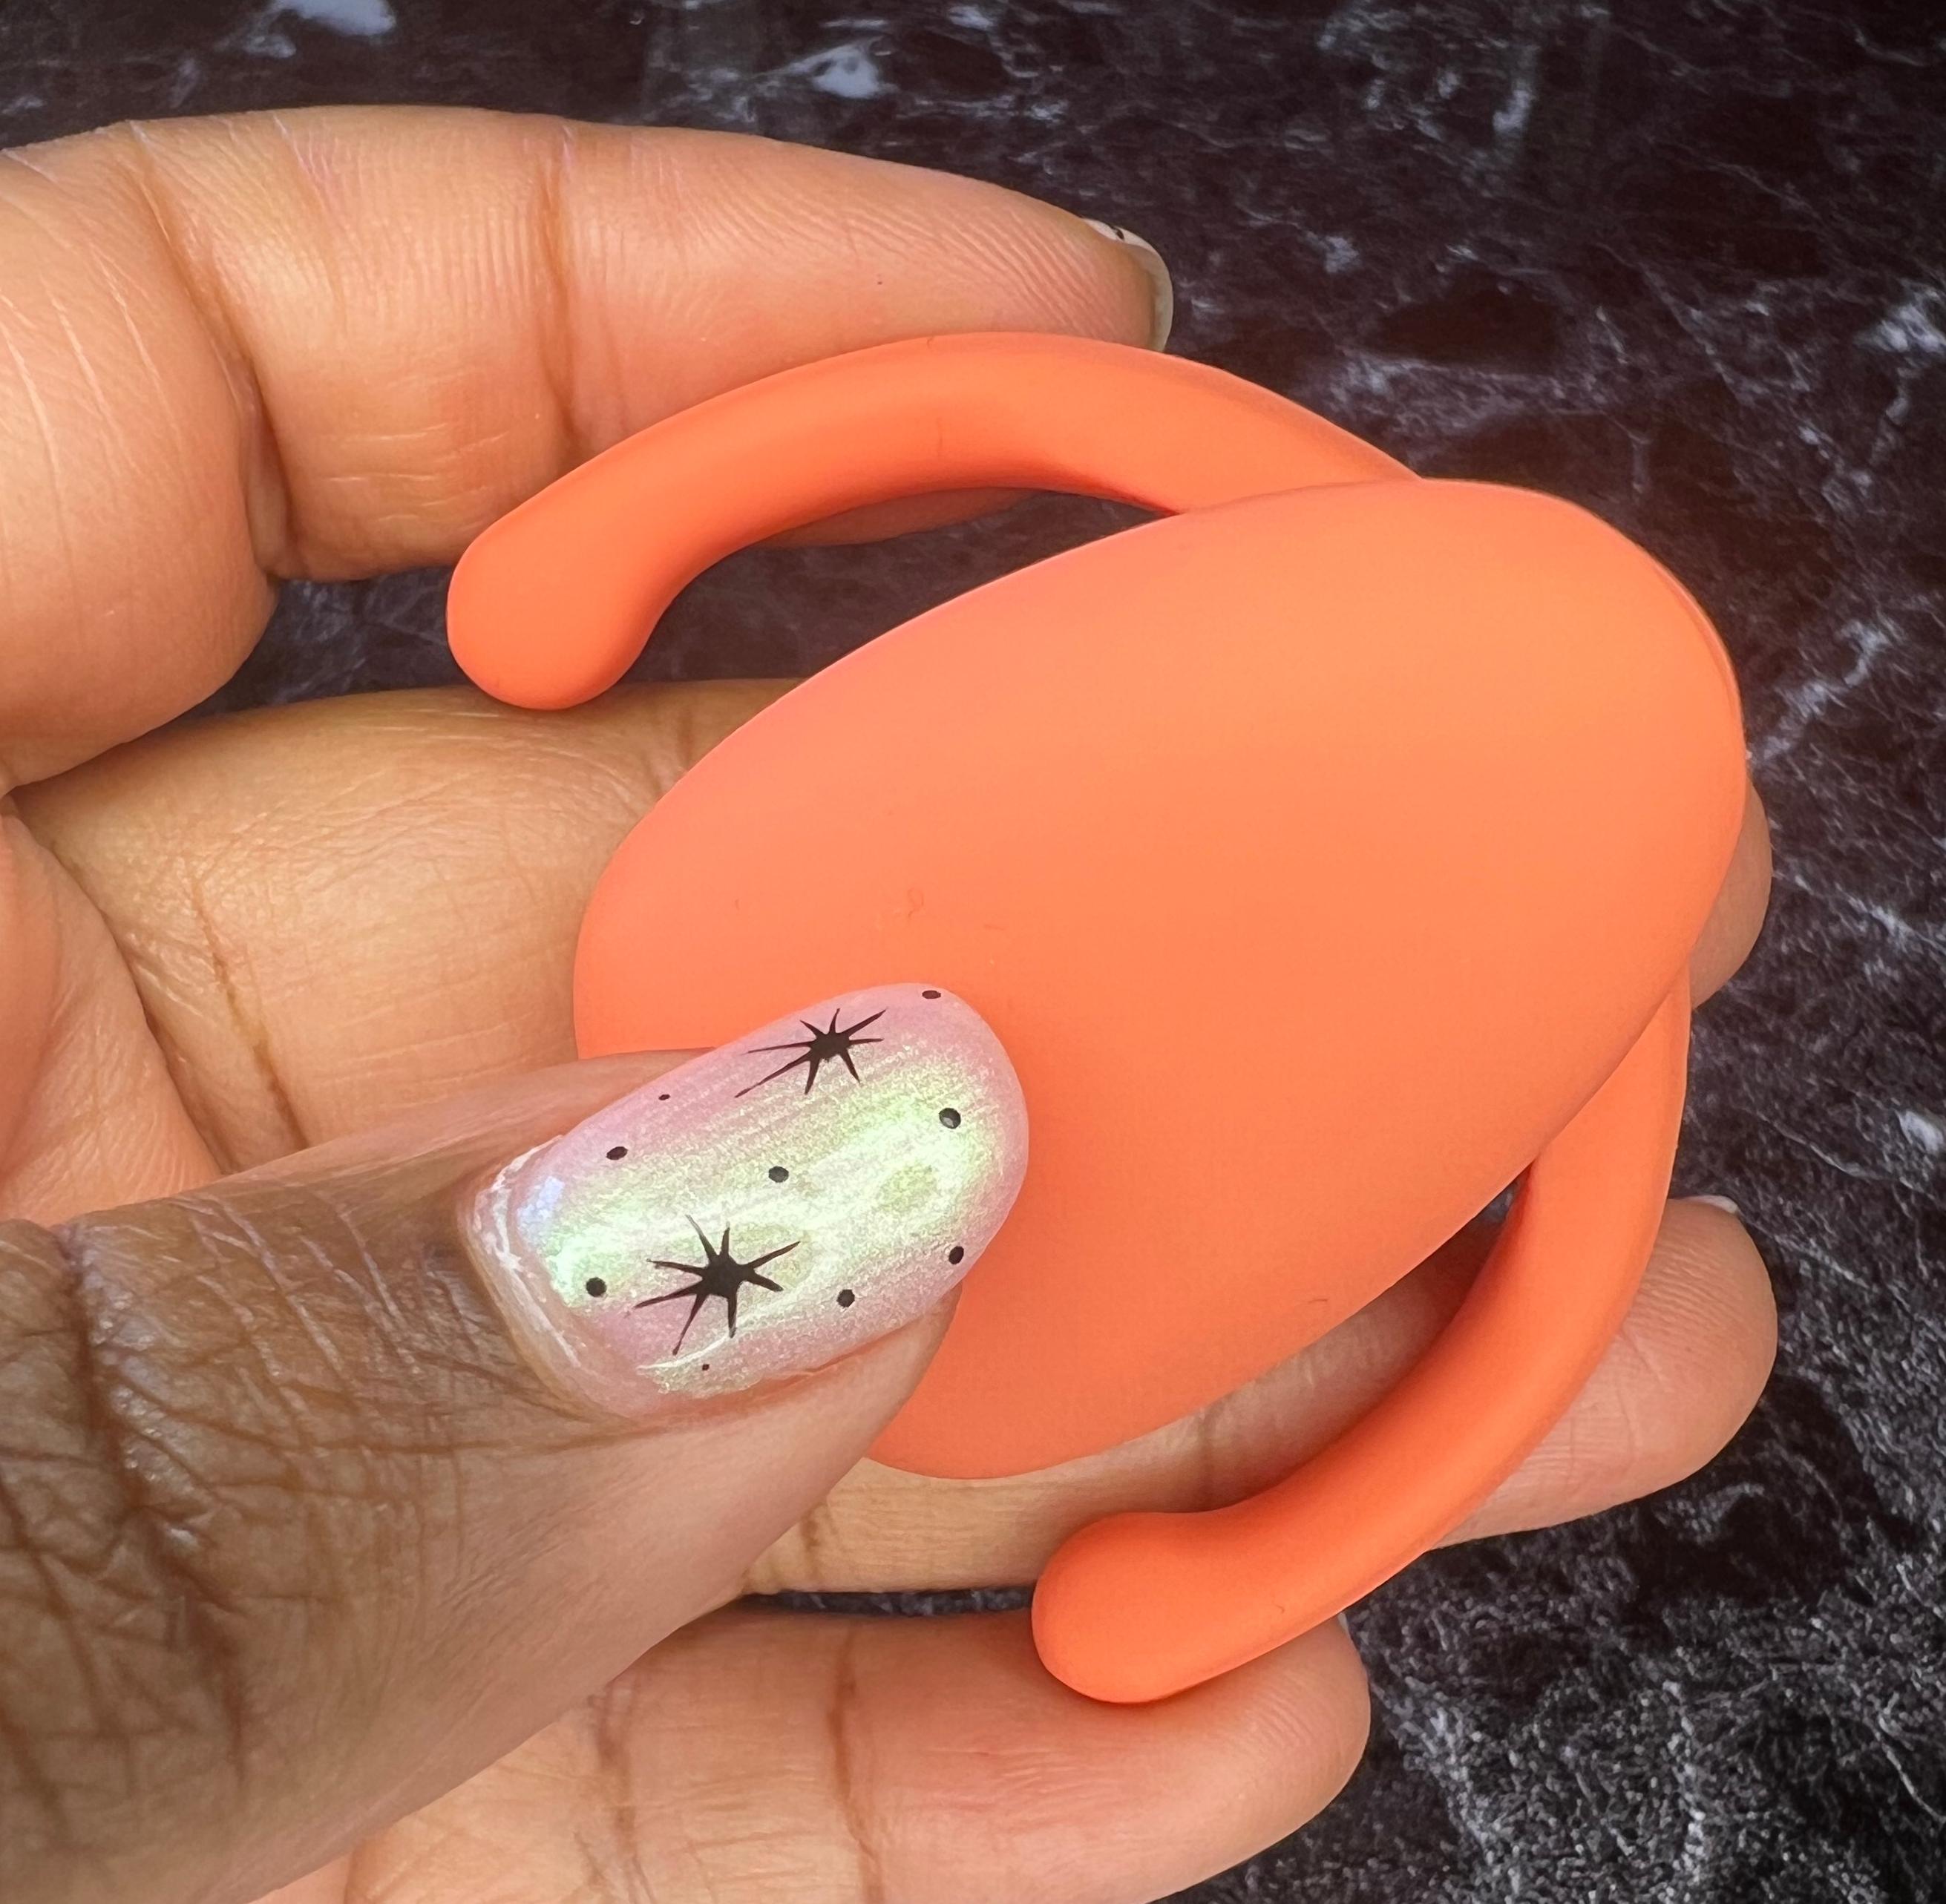 Hand holding orange clitoral vibrator